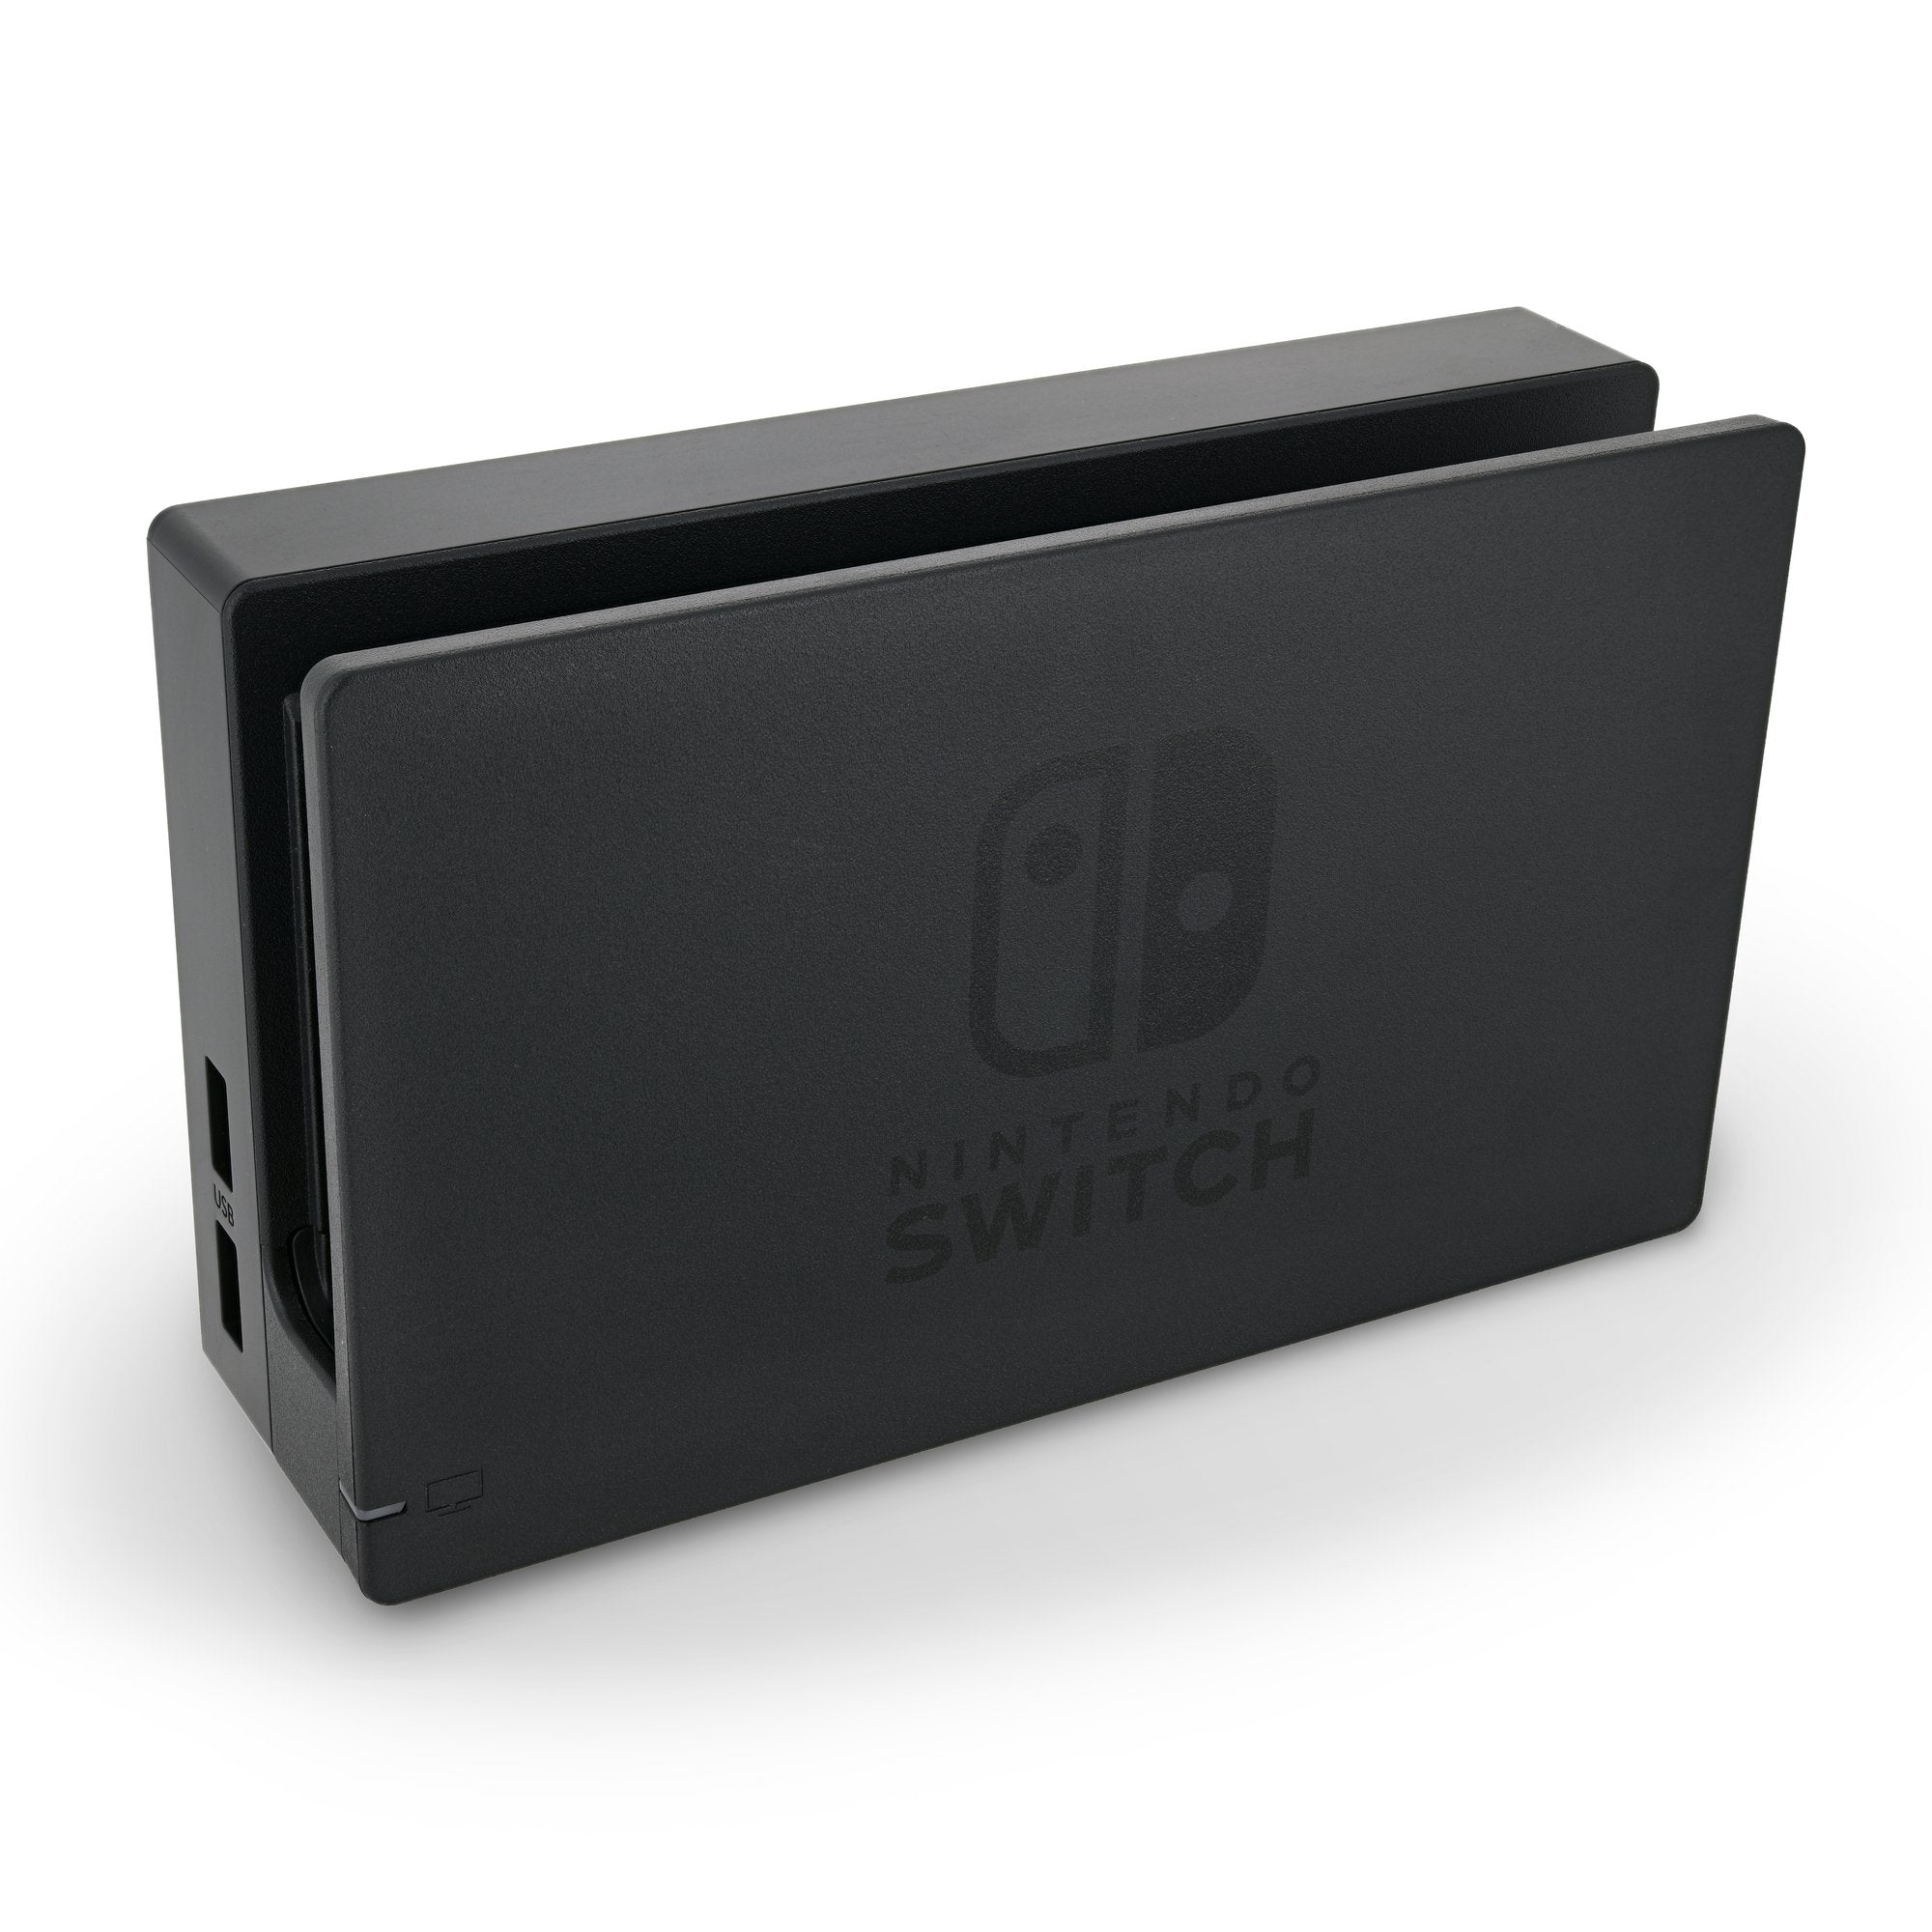 Nintendo Switch Dock Used